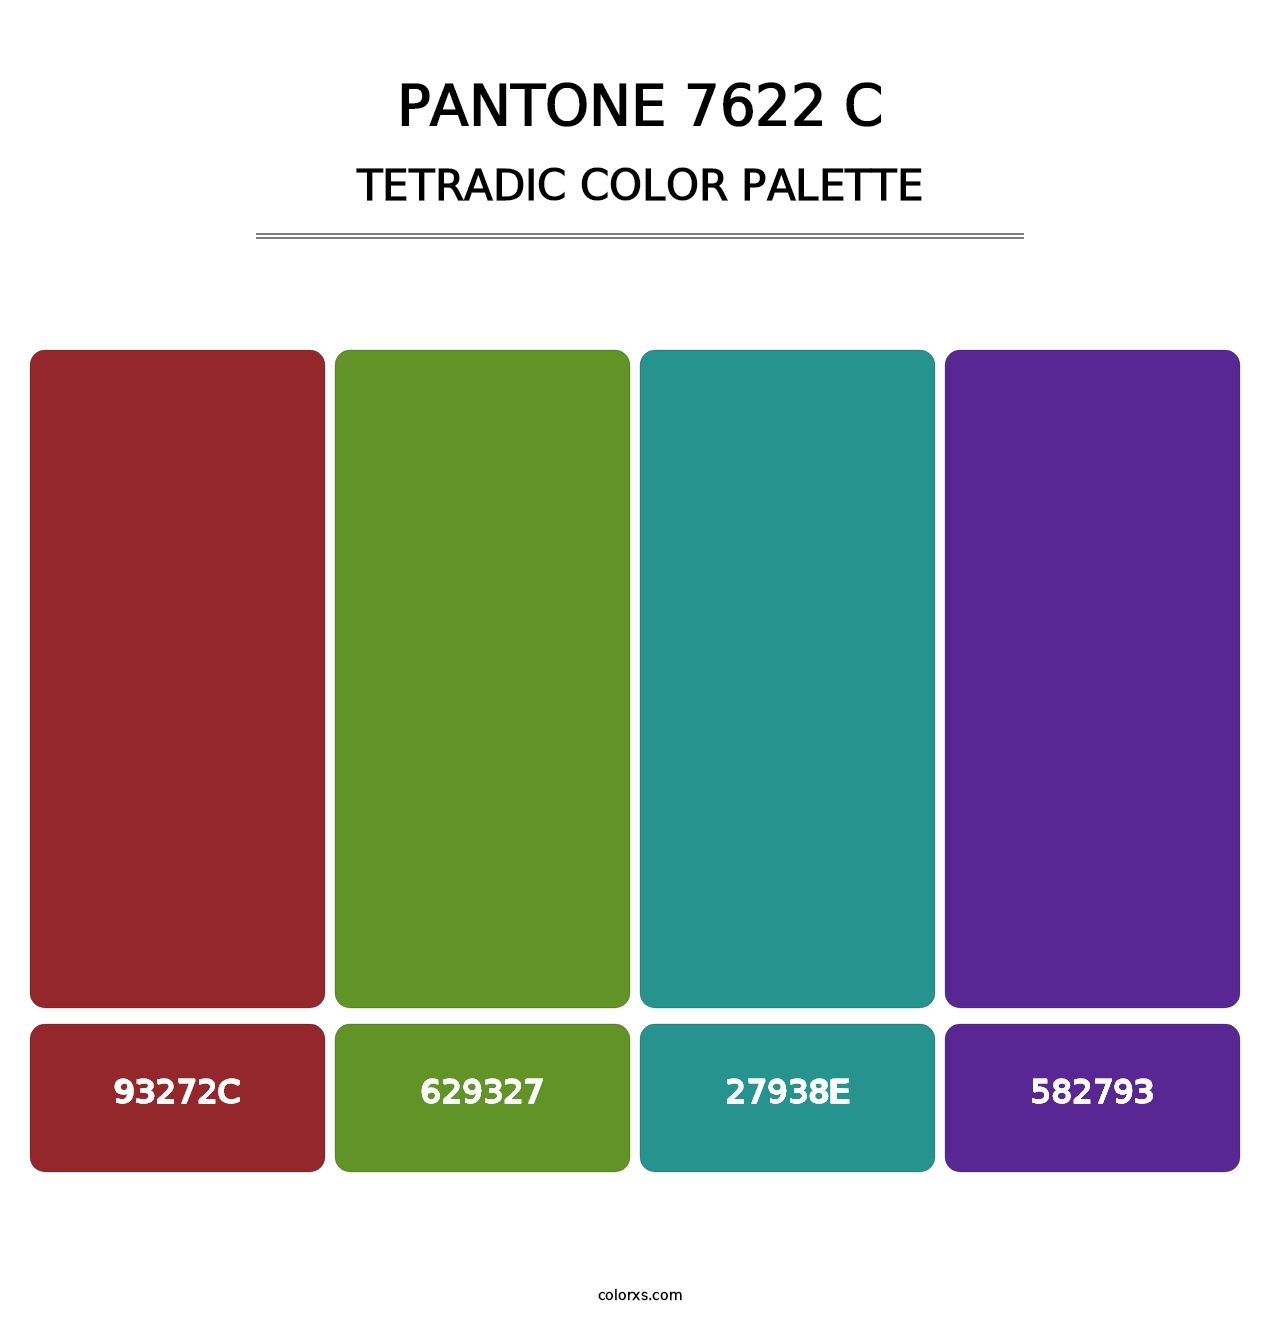 PANTONE 7622 C - Tetradic Color Palette